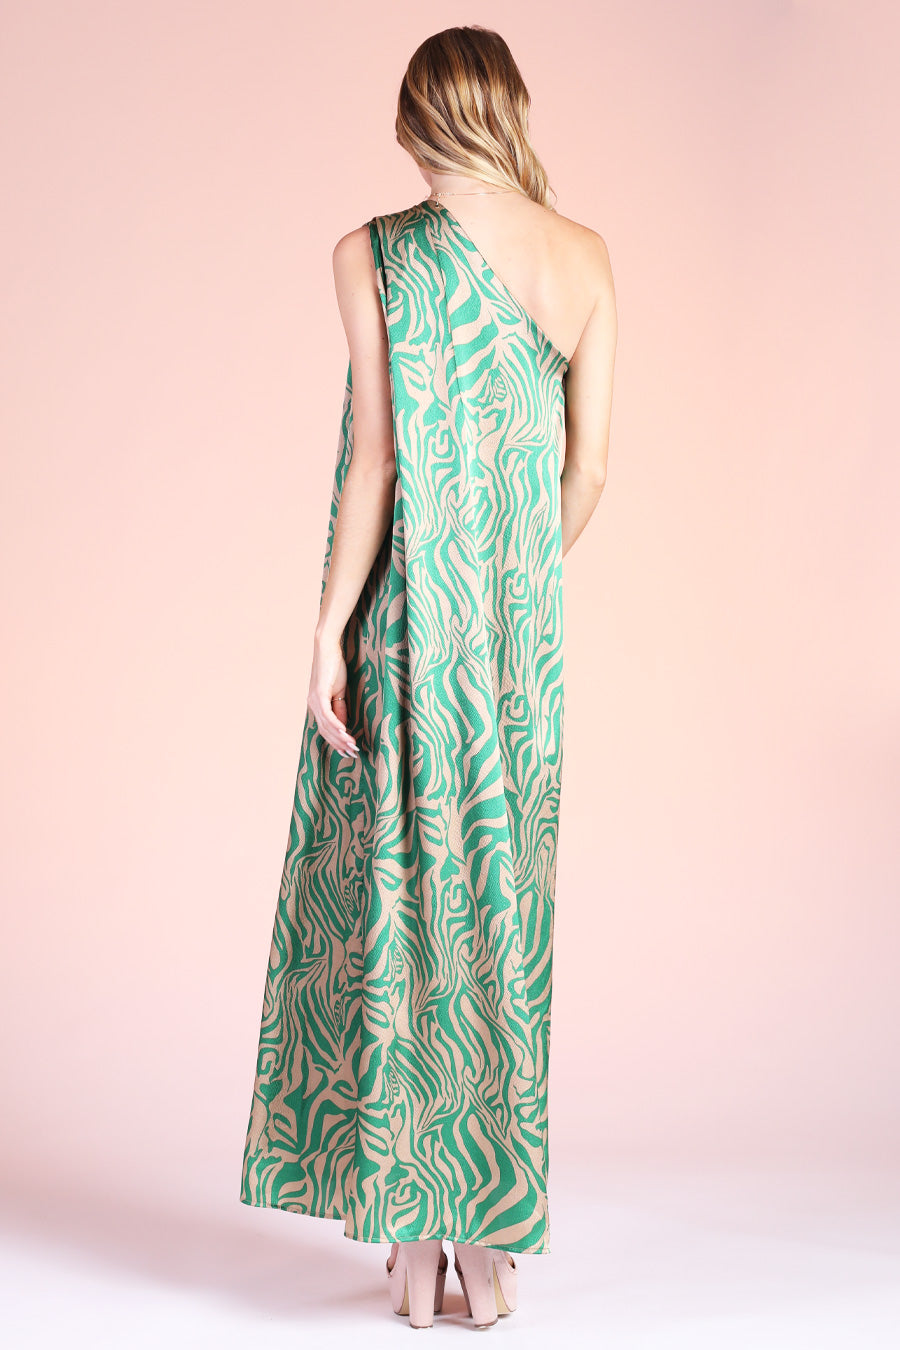 Frida Luxe Satin Greek Goddess Maxi Dress - Green